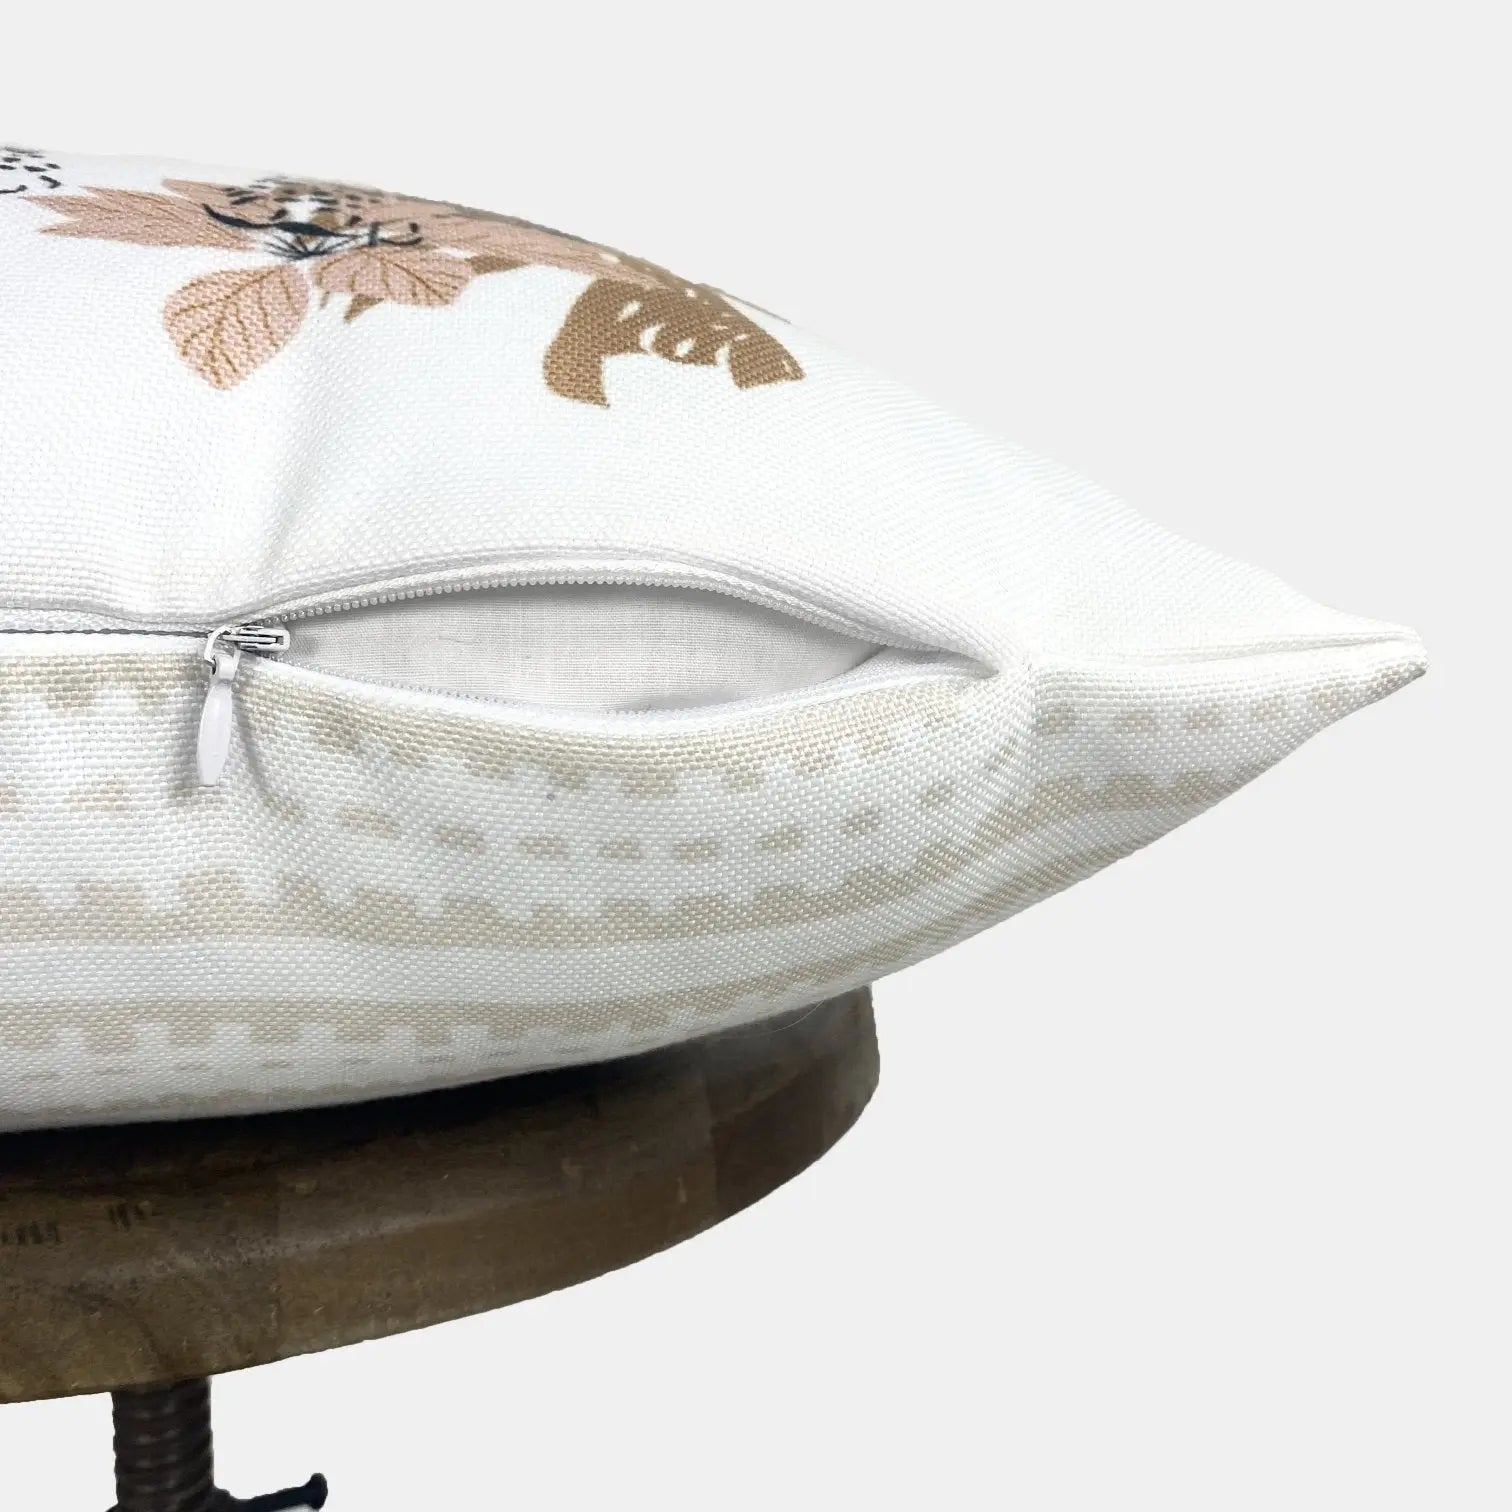 Leopard Lumbar, Leopard Decor, 18x12, Leopard Print, Decorative Pillows, Mom Gift, Home decor, Bedroom Decor, Throw Pillows